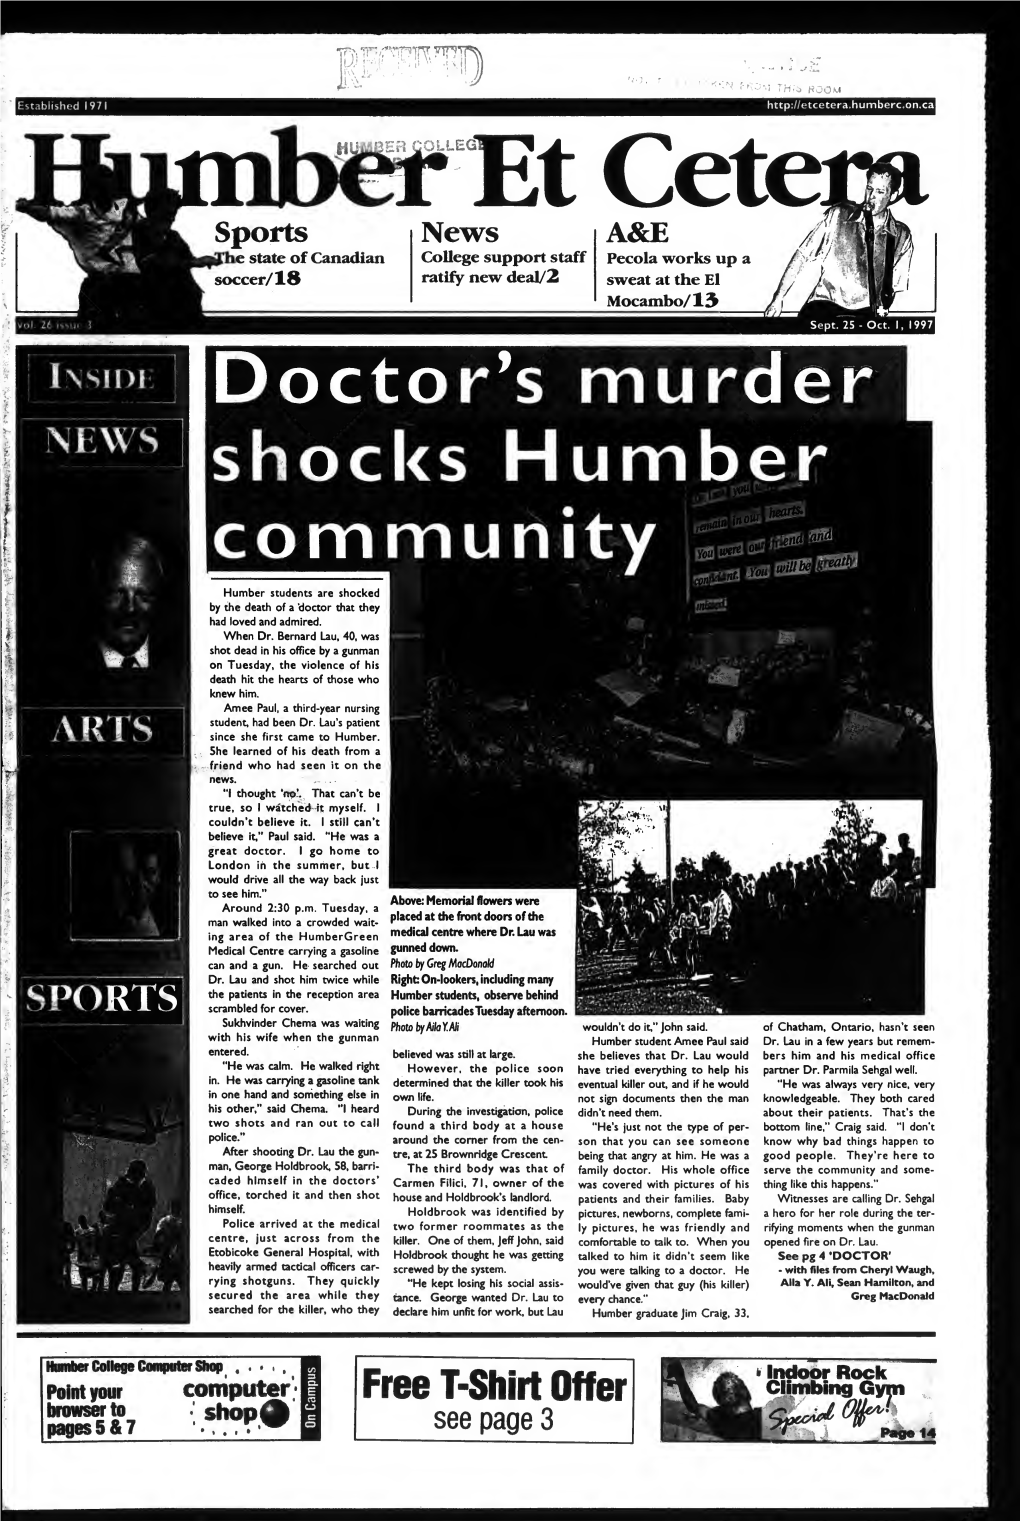 Doctor's Murder NEWS